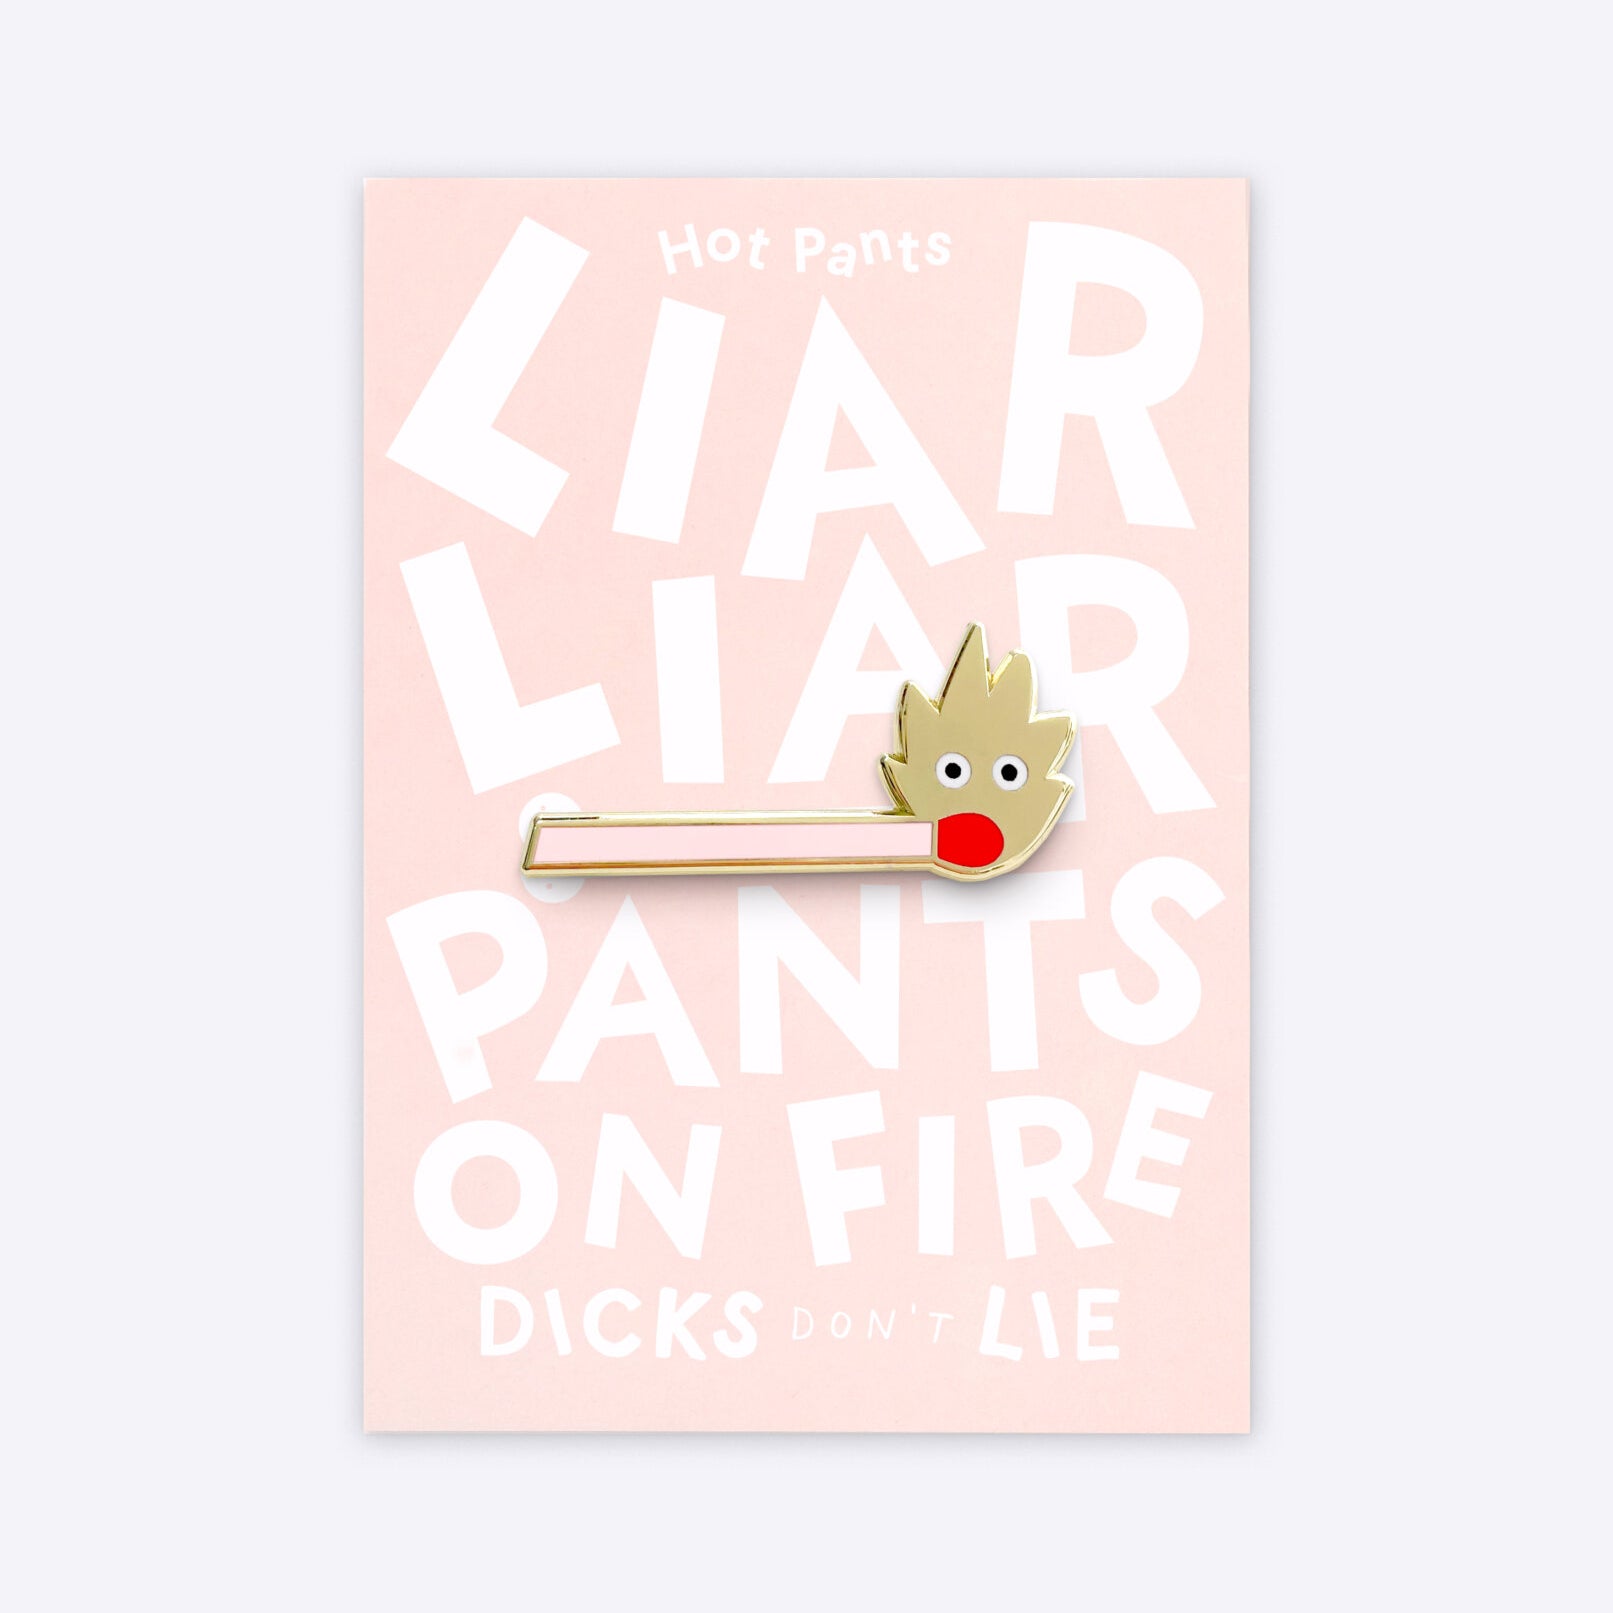 Dicks Don't Lie Hot Pants - Pin